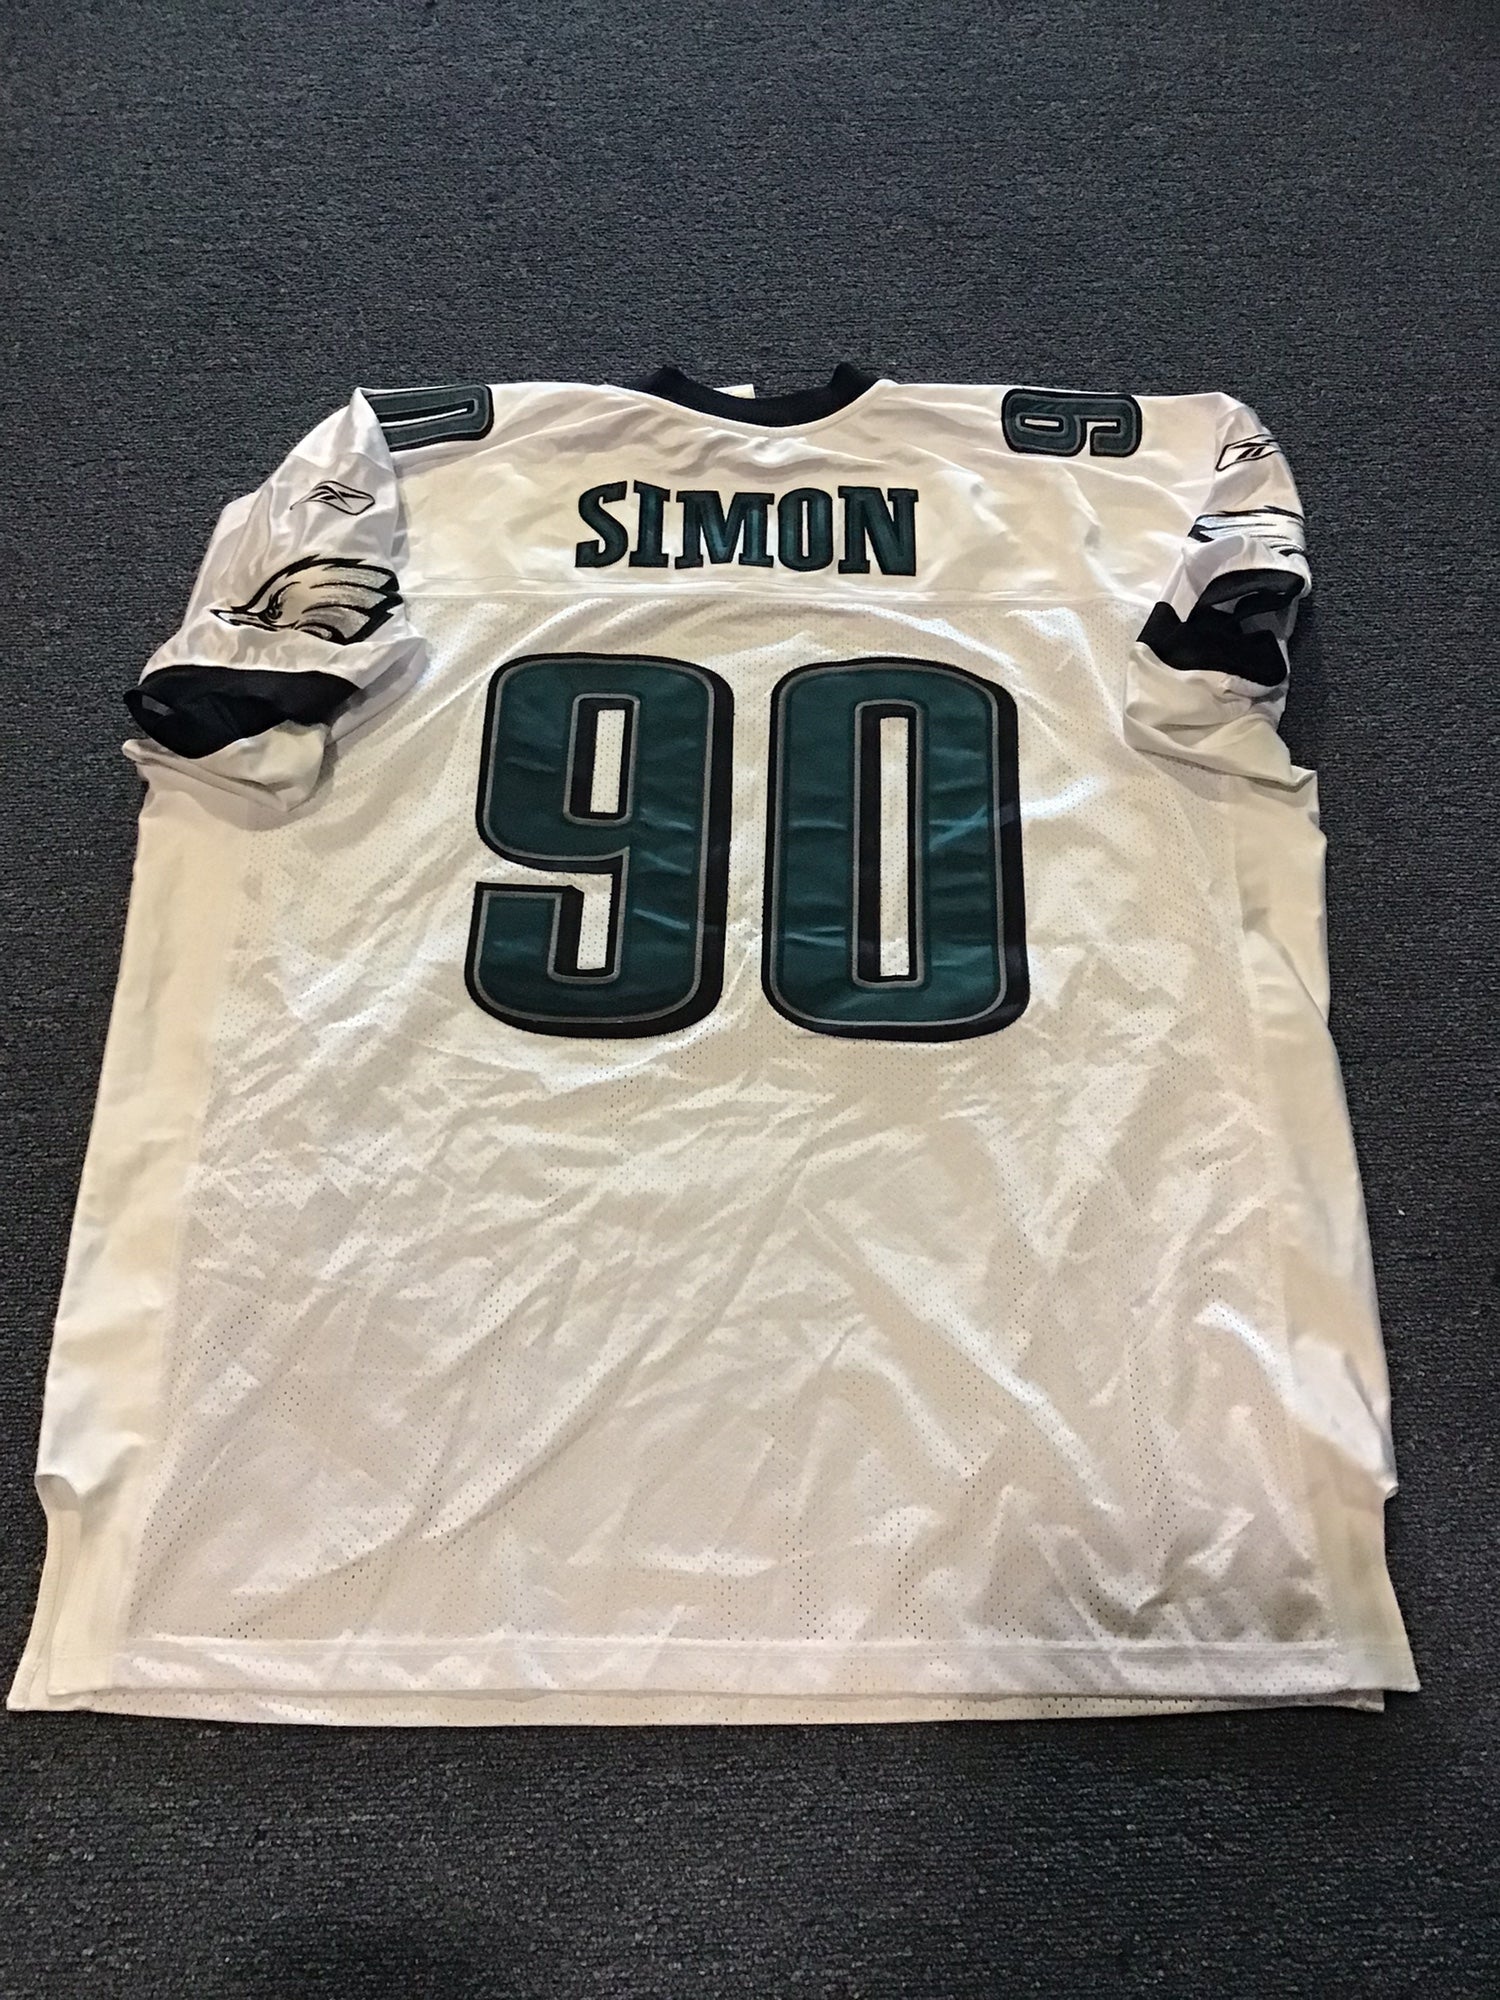 NWOT Philadelphia Eagles Men's 56 Reebok Jersey #90 Simon